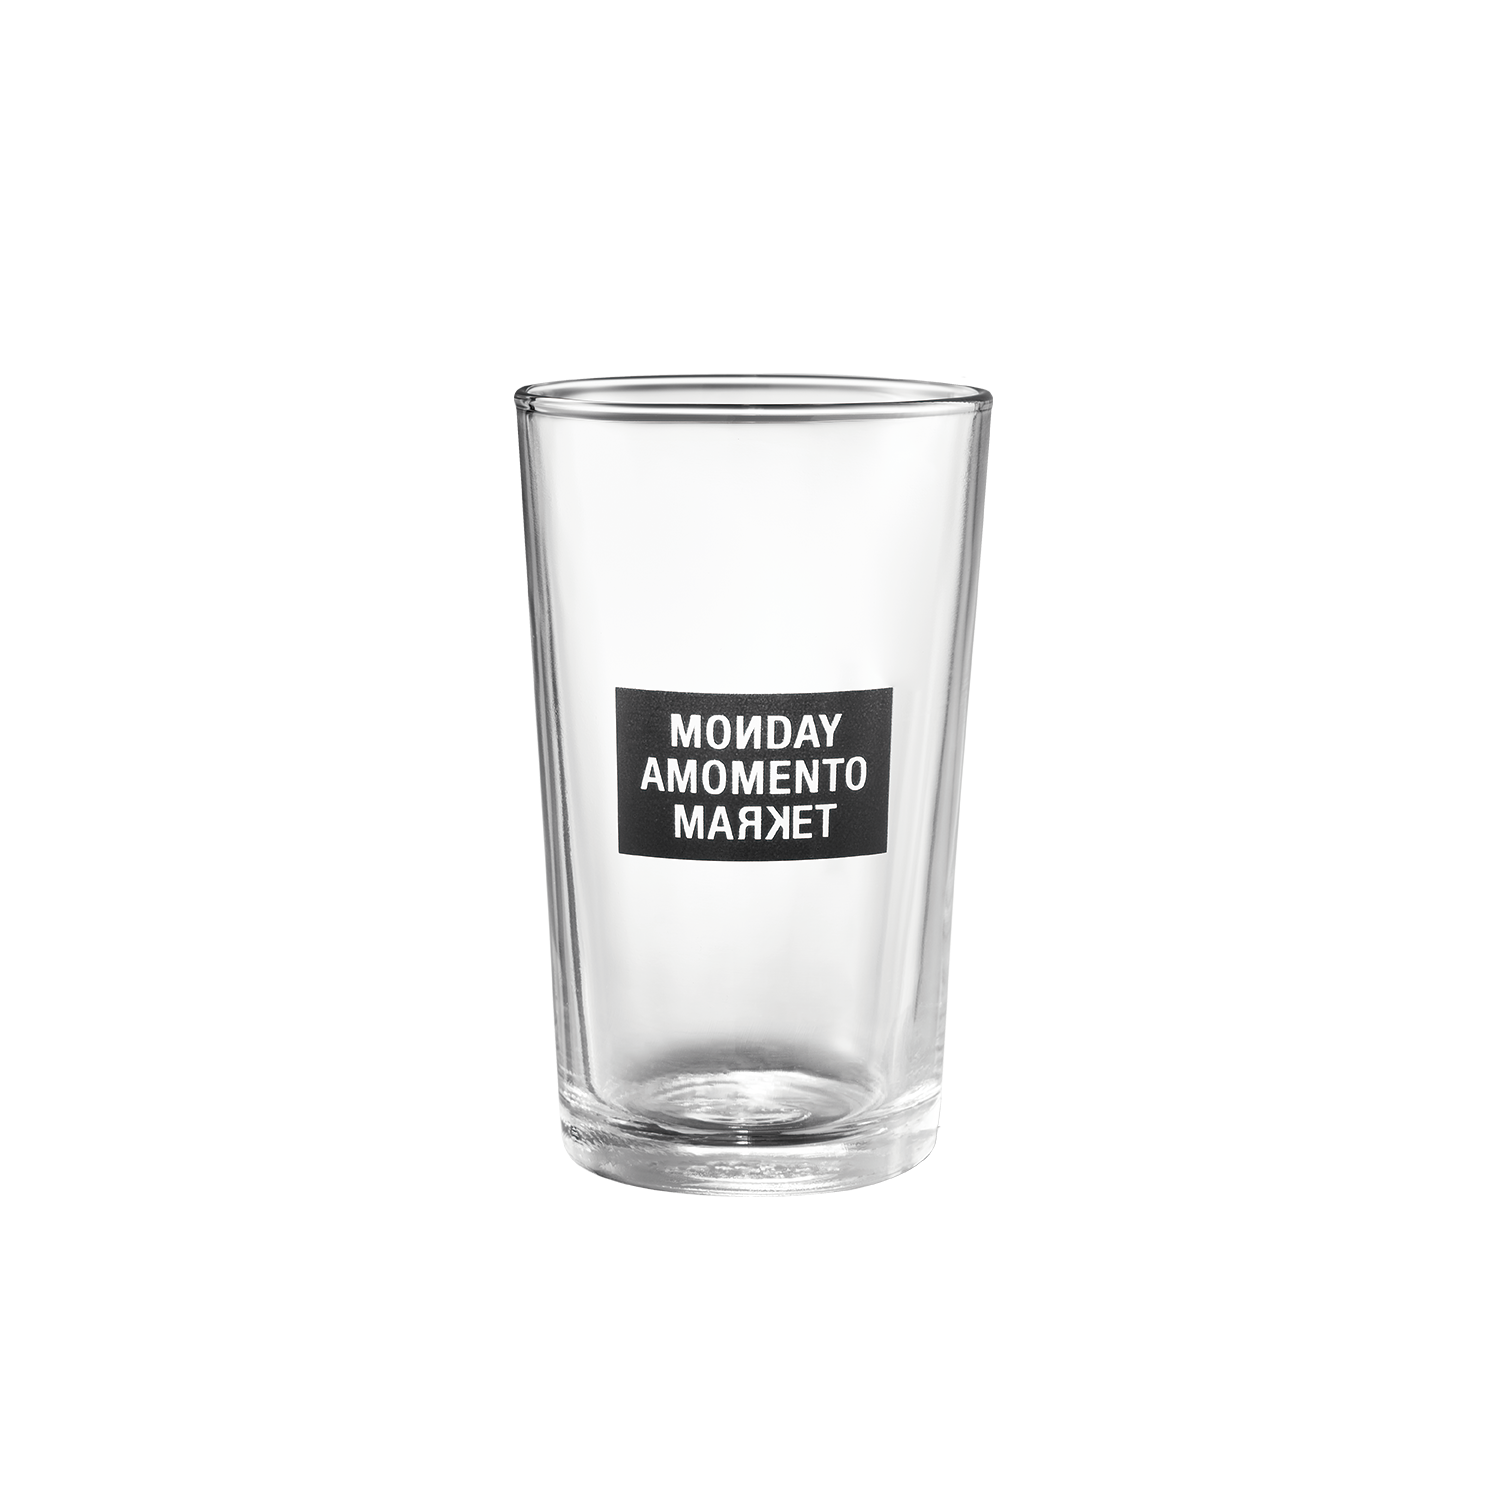 MONDAY AMOMENTO MARKET  GLASS CUP